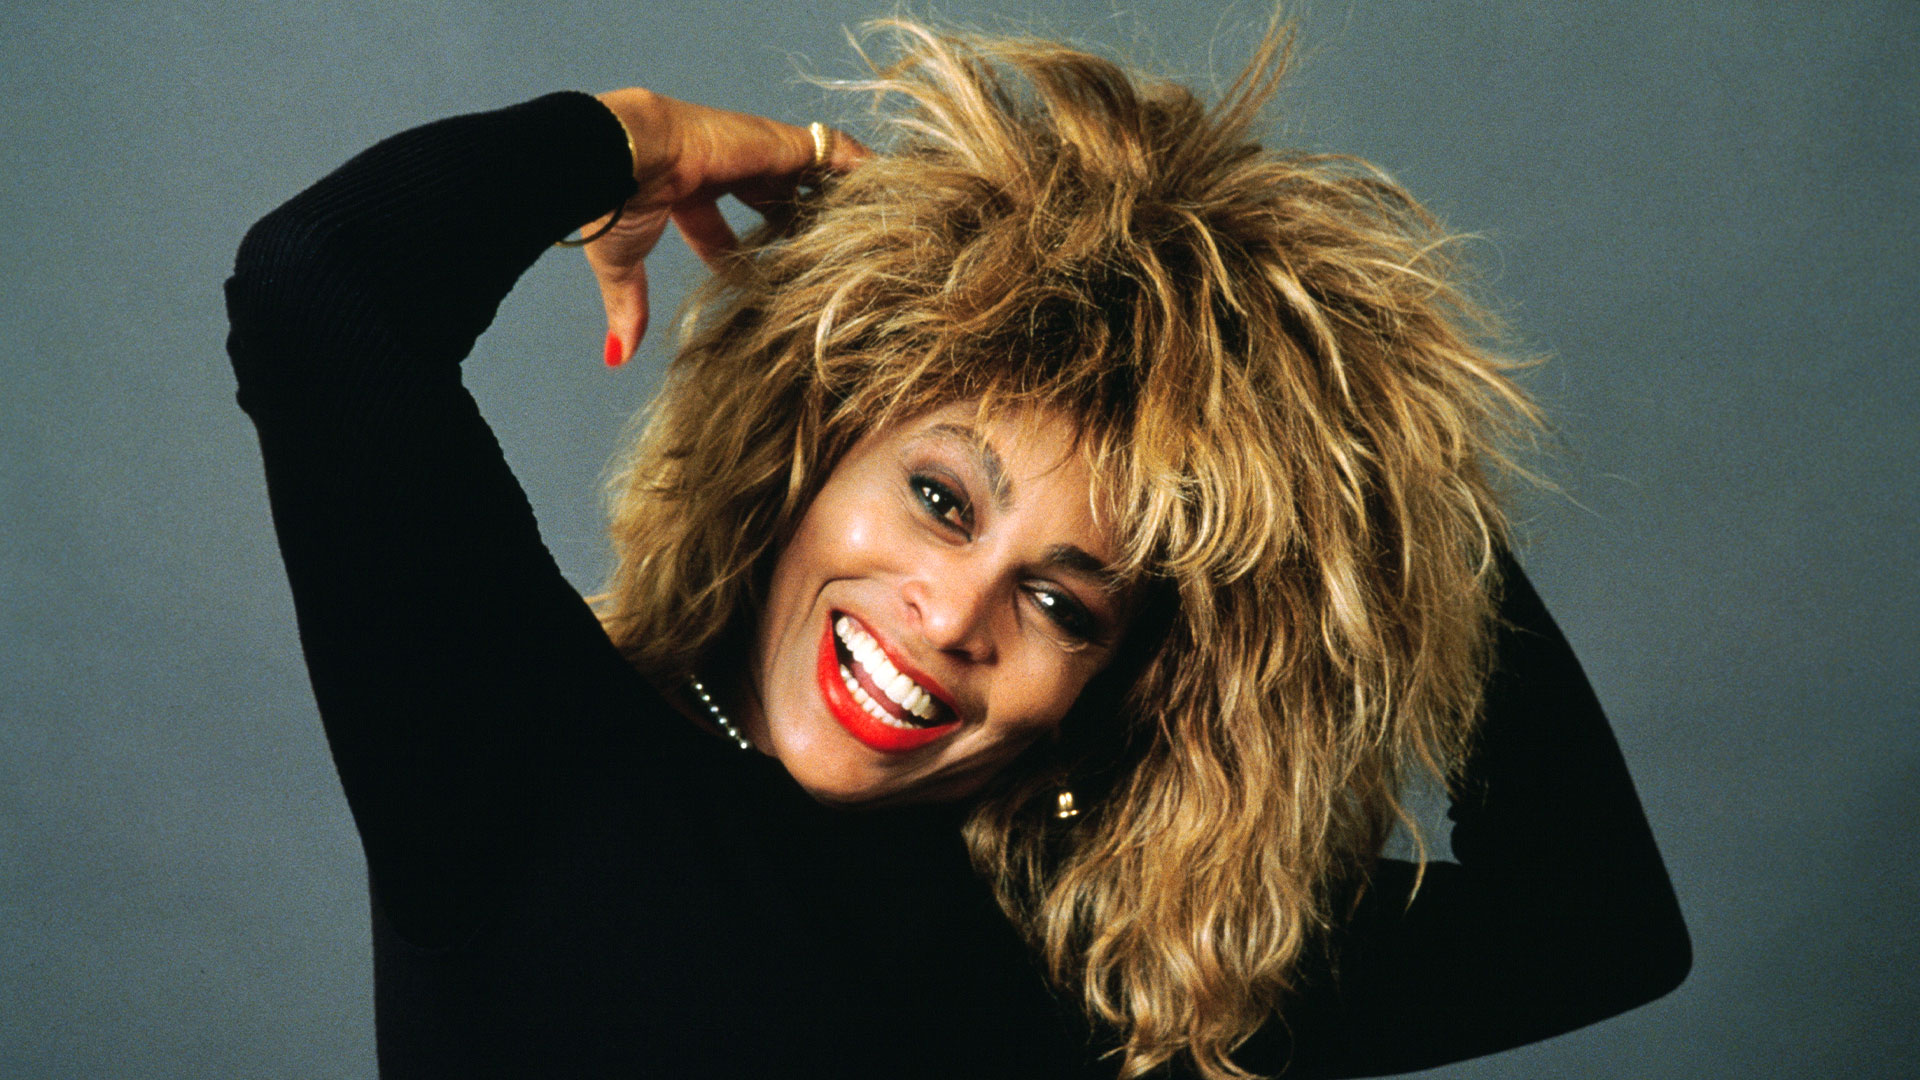 Feminista en falta: el pelo como demostración de poder, de Tina Turner a “La Diplomática”